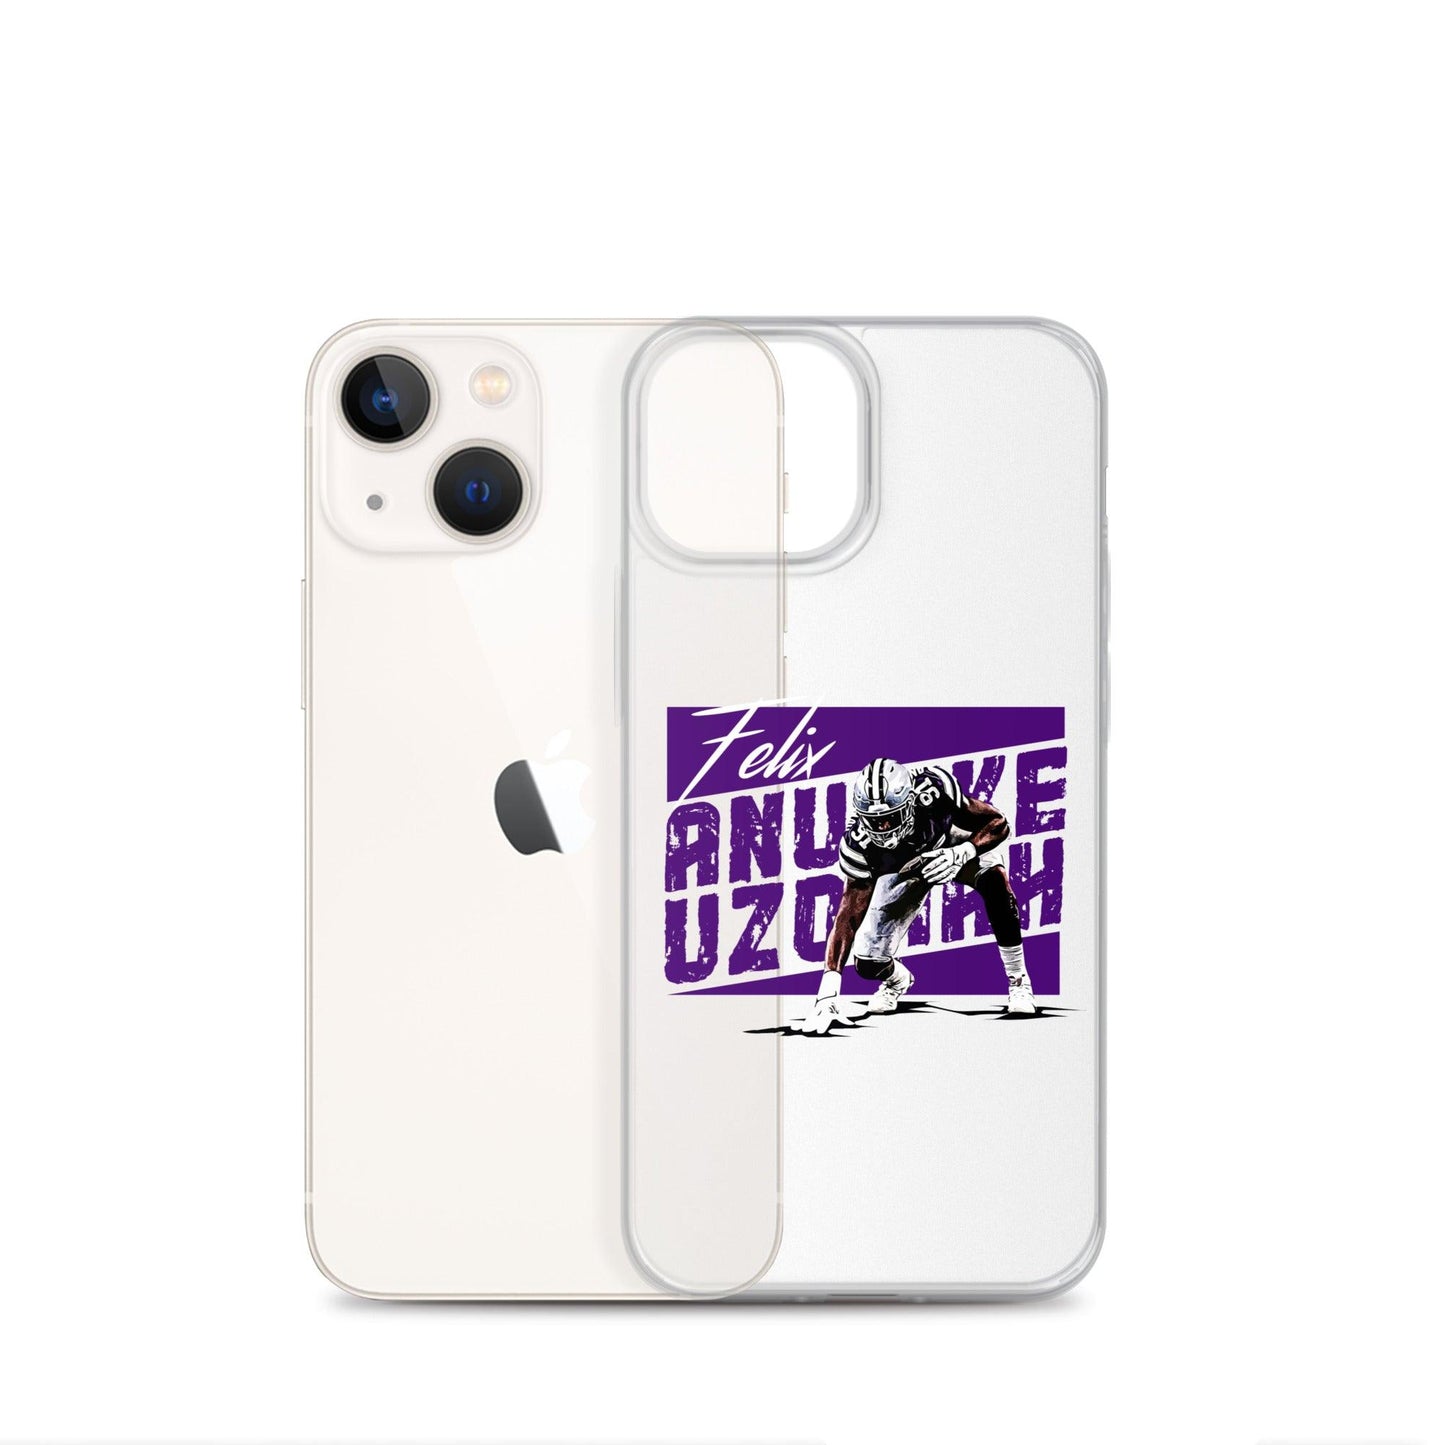 Felix Anudike-Uzomah "Game Ready" iPhone Case - Fan Arch